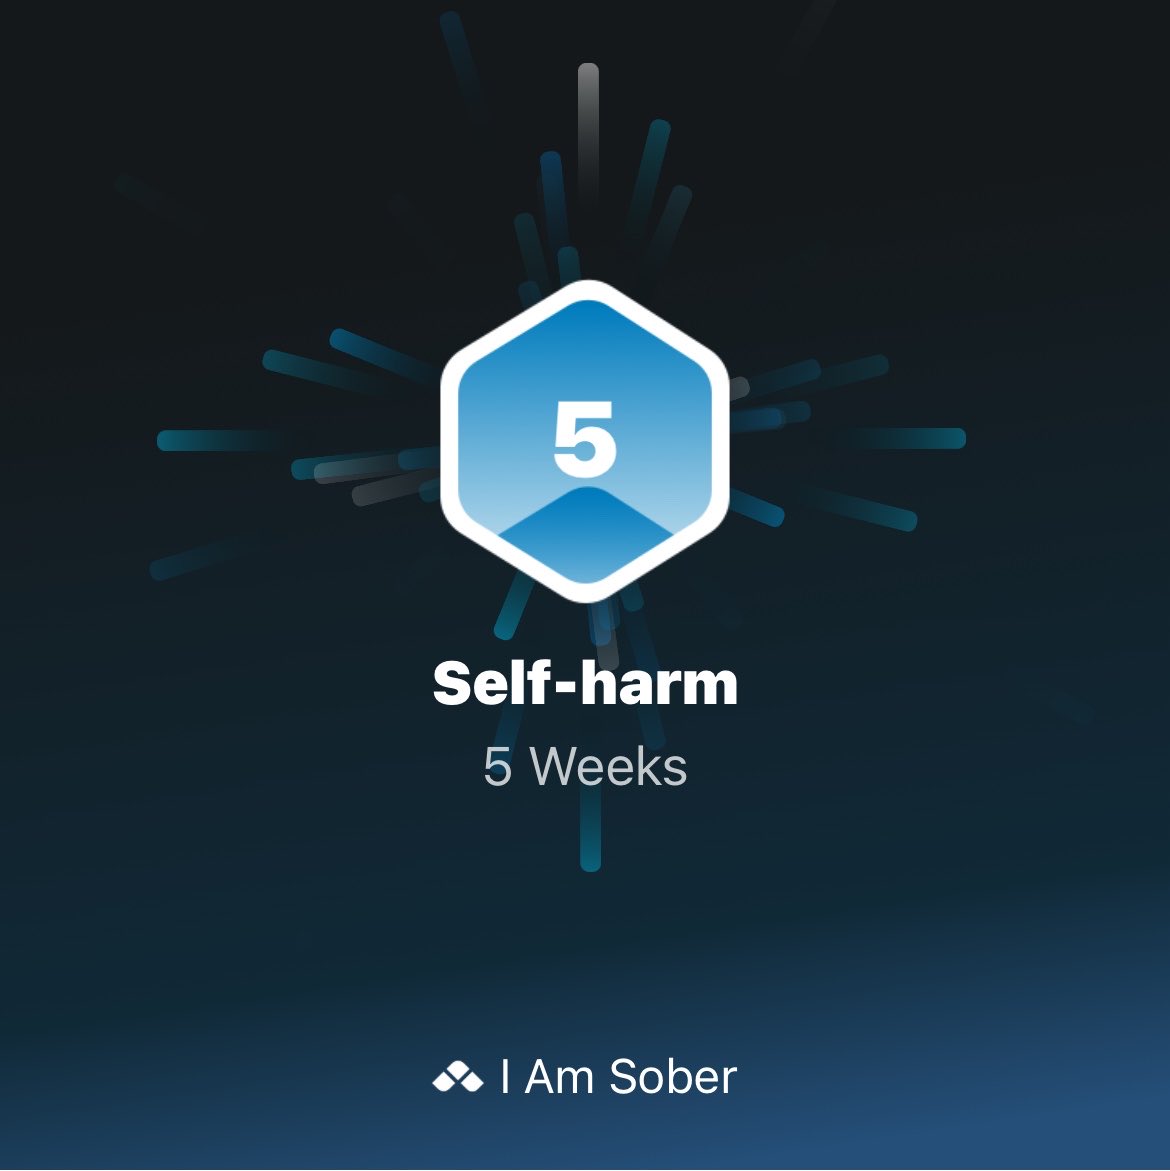 I reached my 5 Weeks milestone from Self-harm! #iamsober